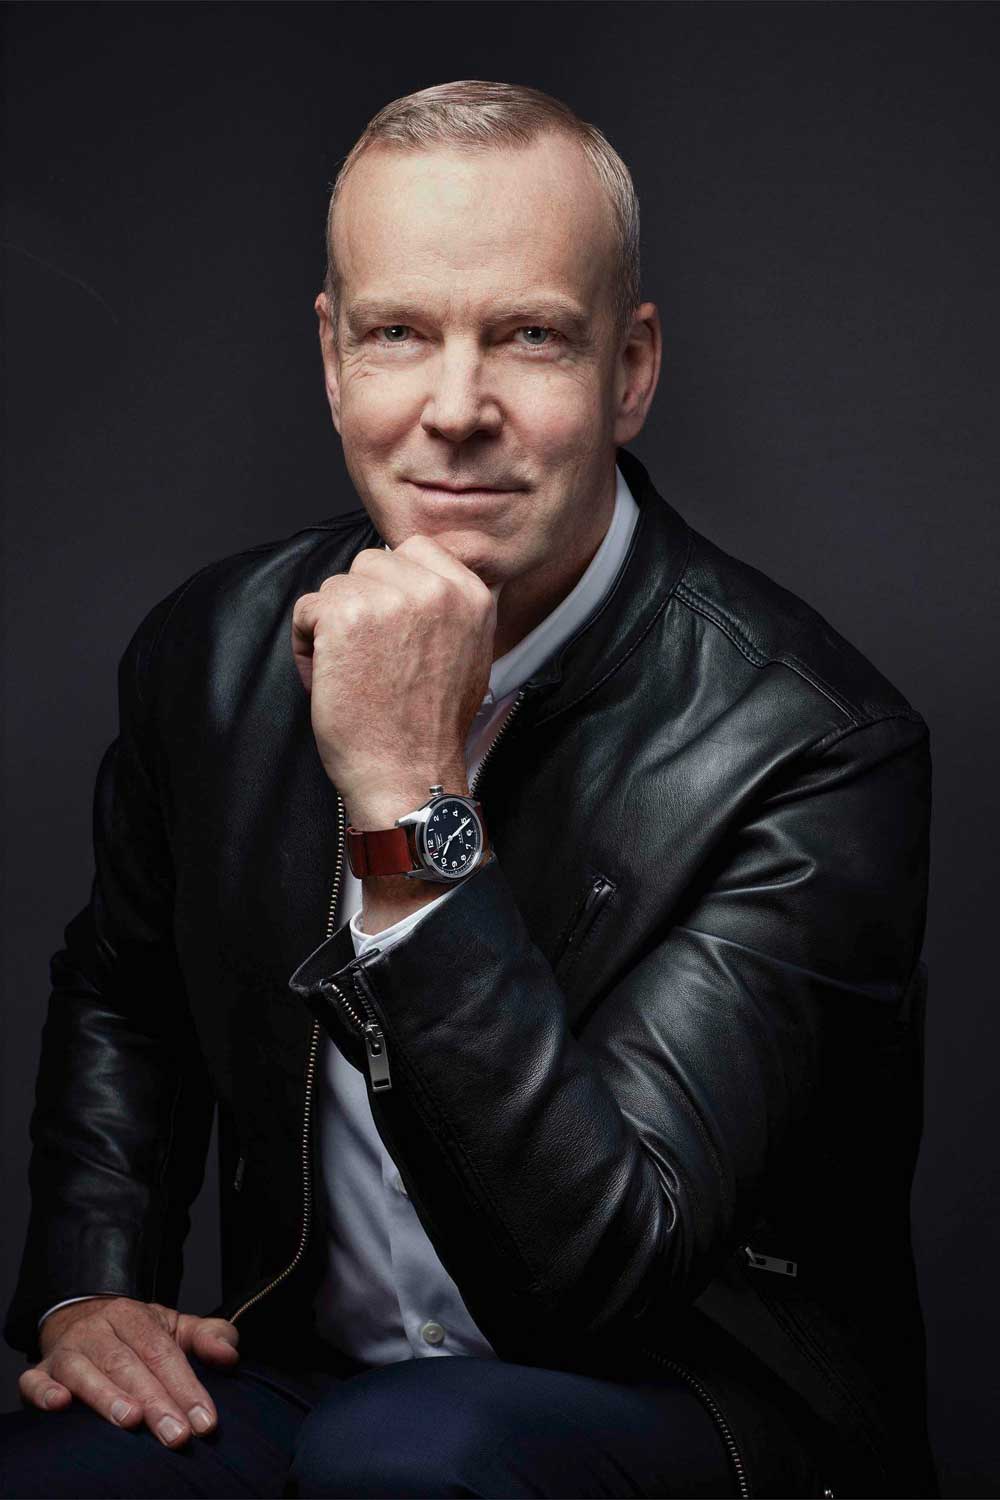 Matthias Breschan, CEO of Longines since July 2020